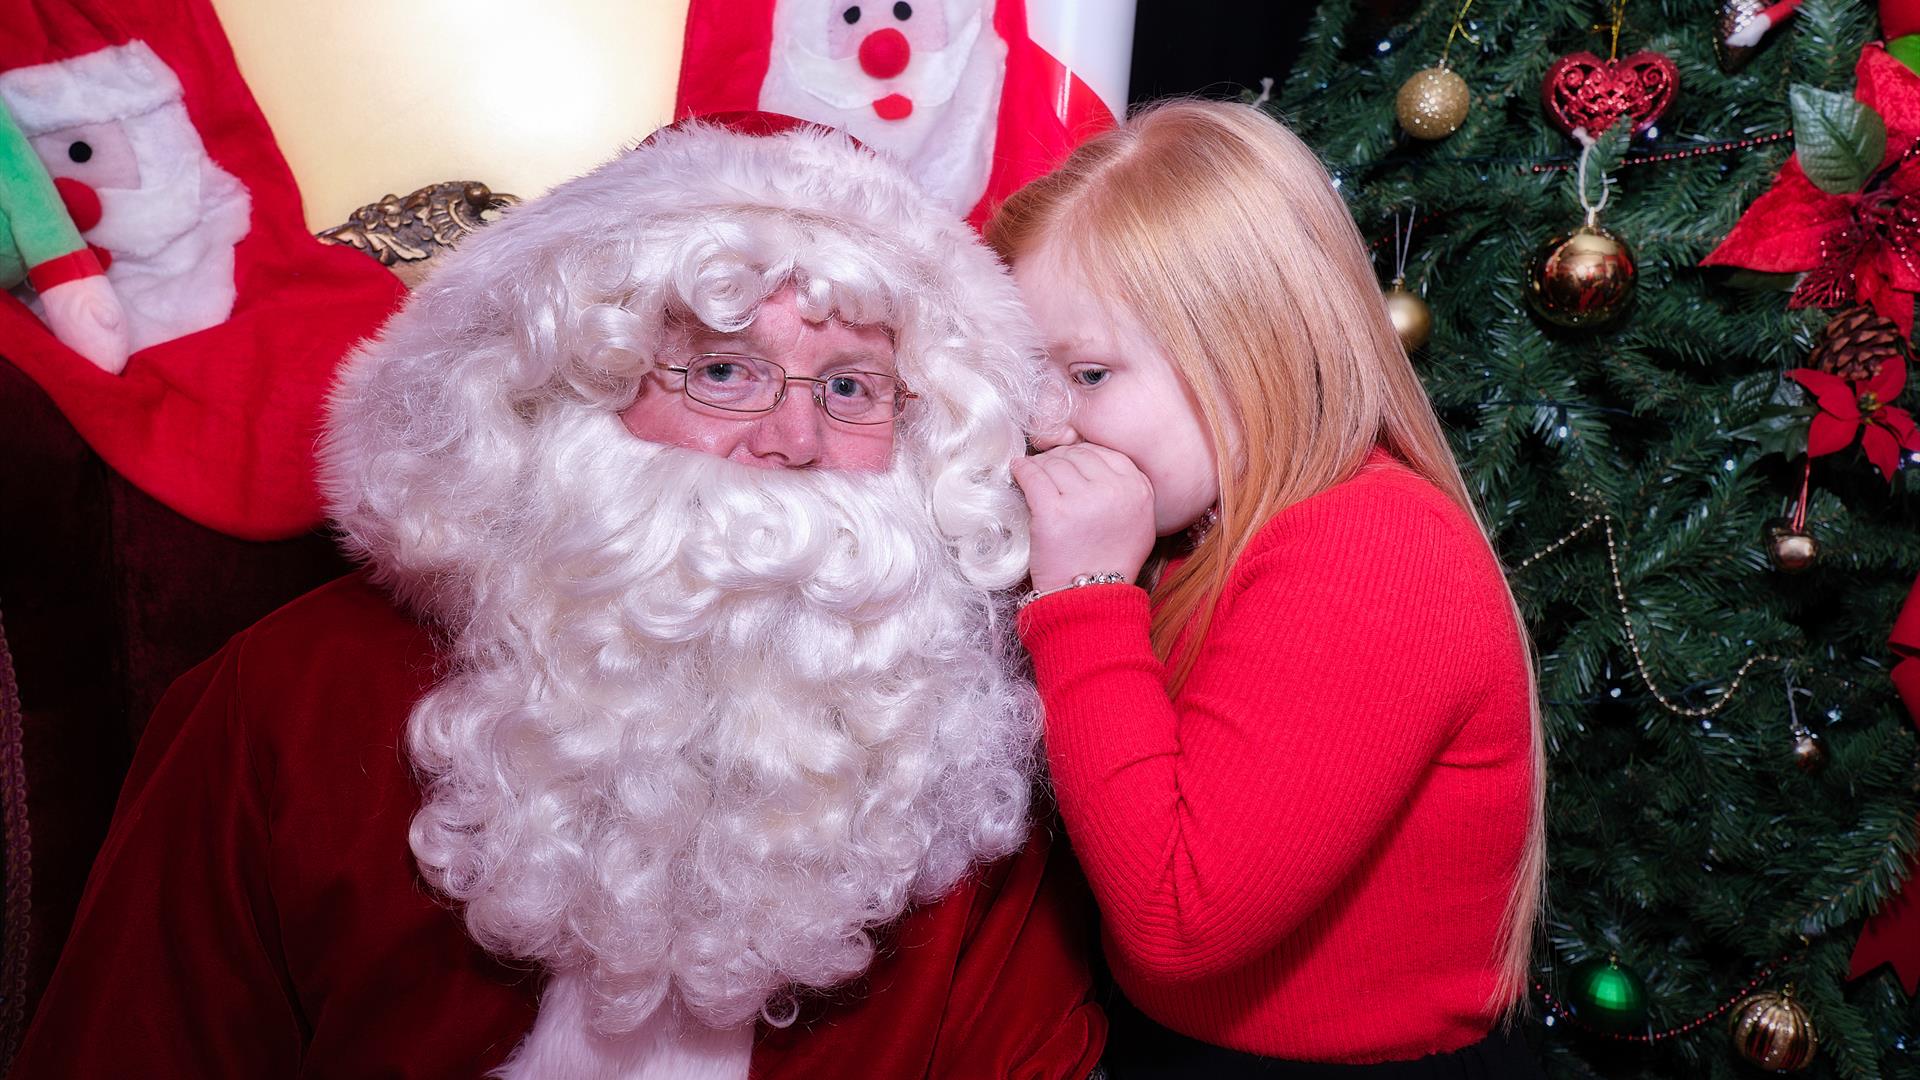 Young girl whispering in Santa's ear